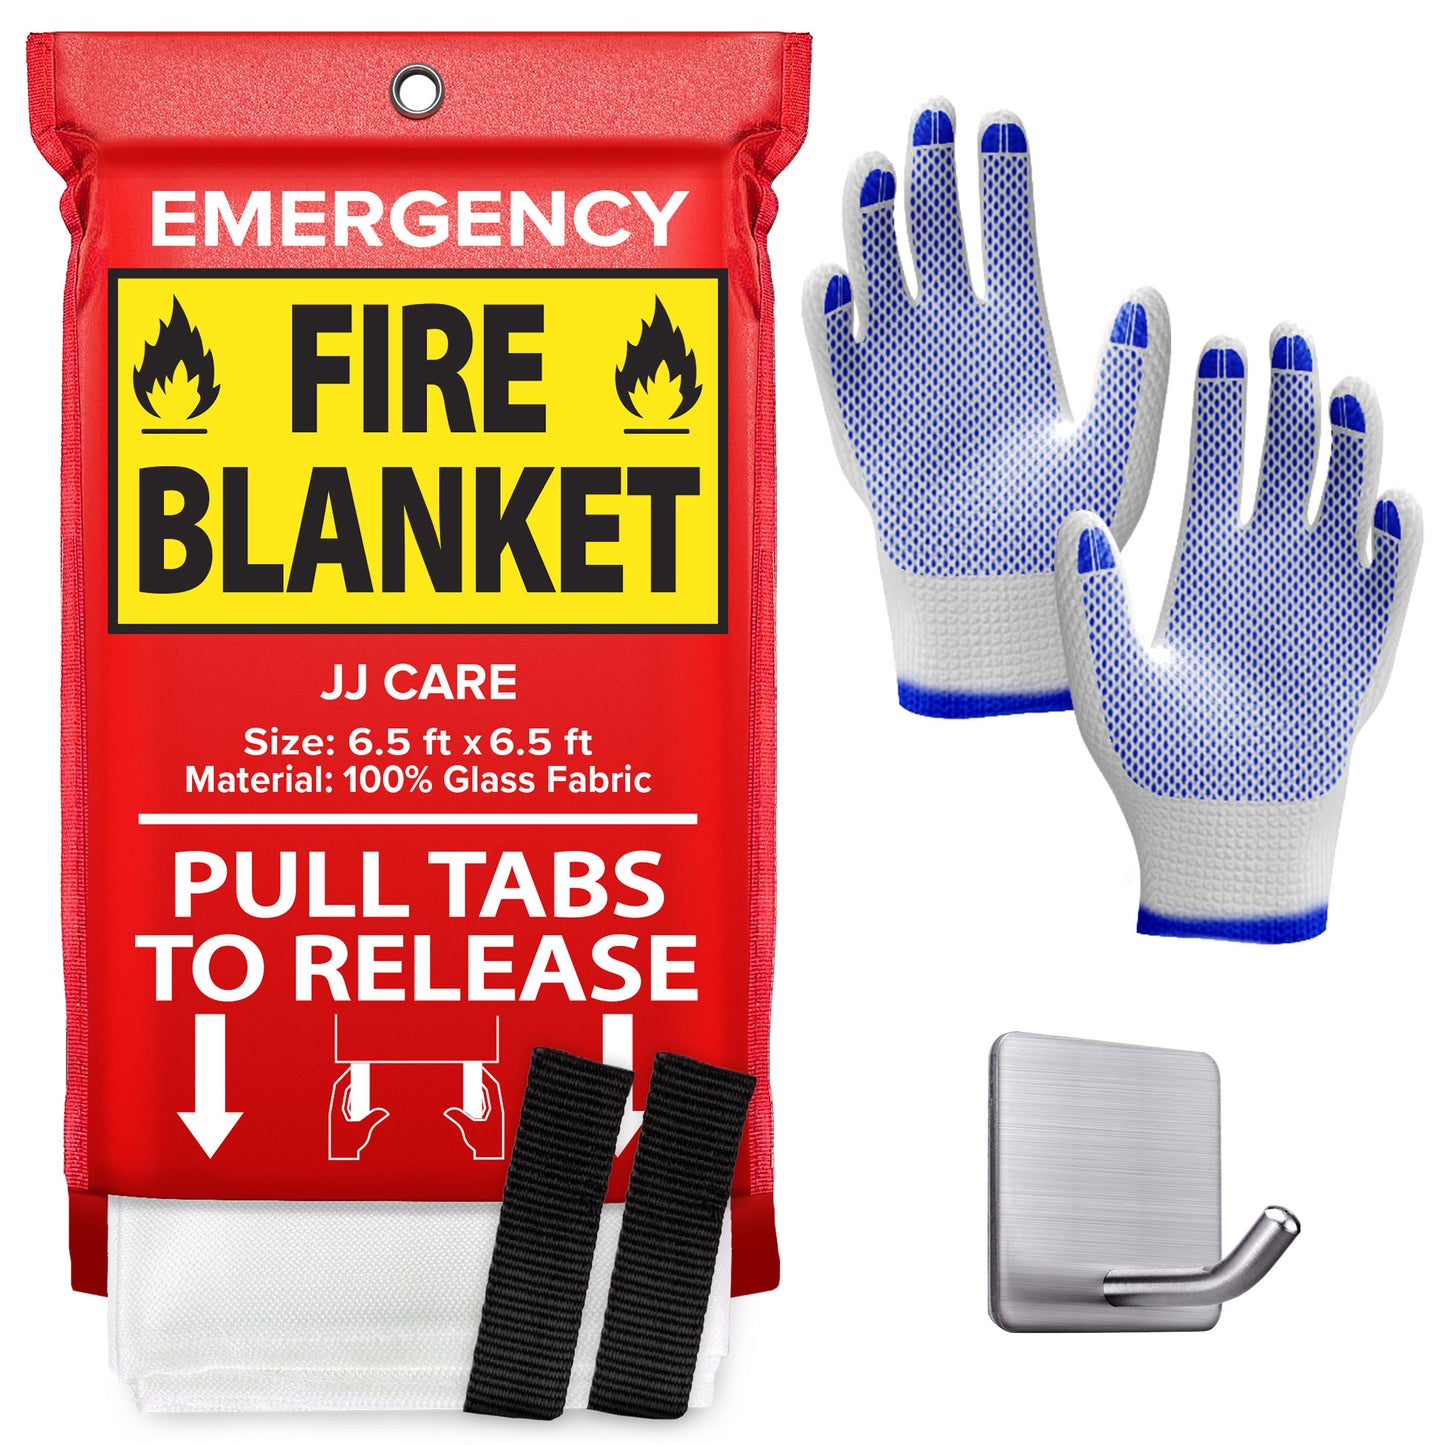 JJ CARE Fire Blanket